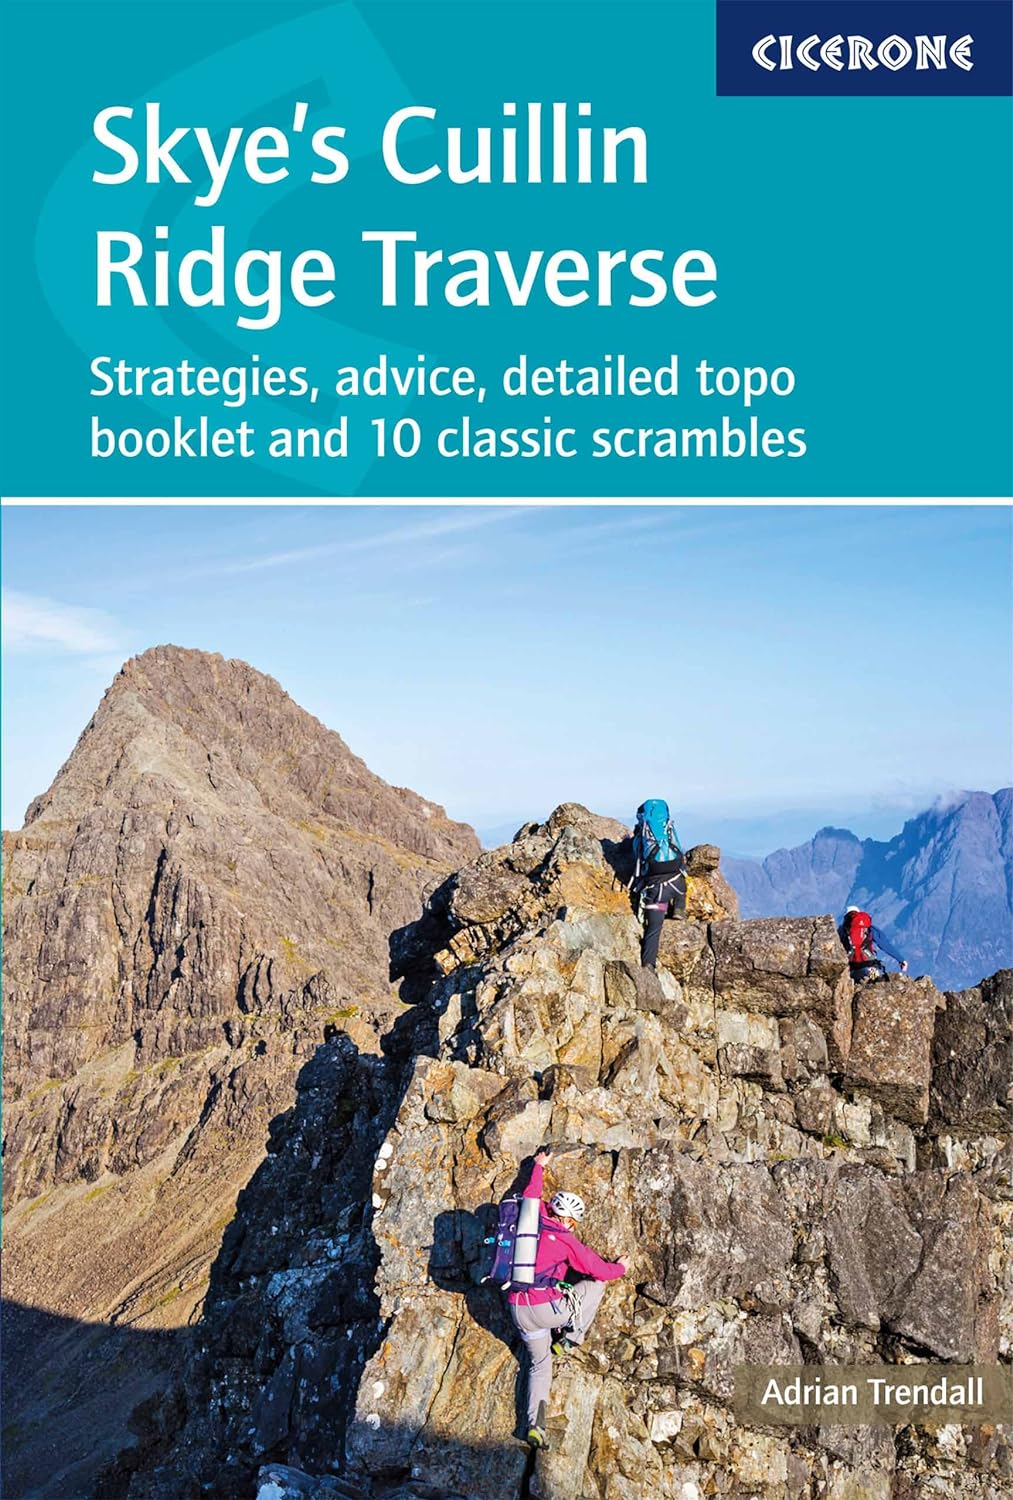 Online bestellen: Wandelgids Skye's Cuillin Ridge Traverse | Cicerone